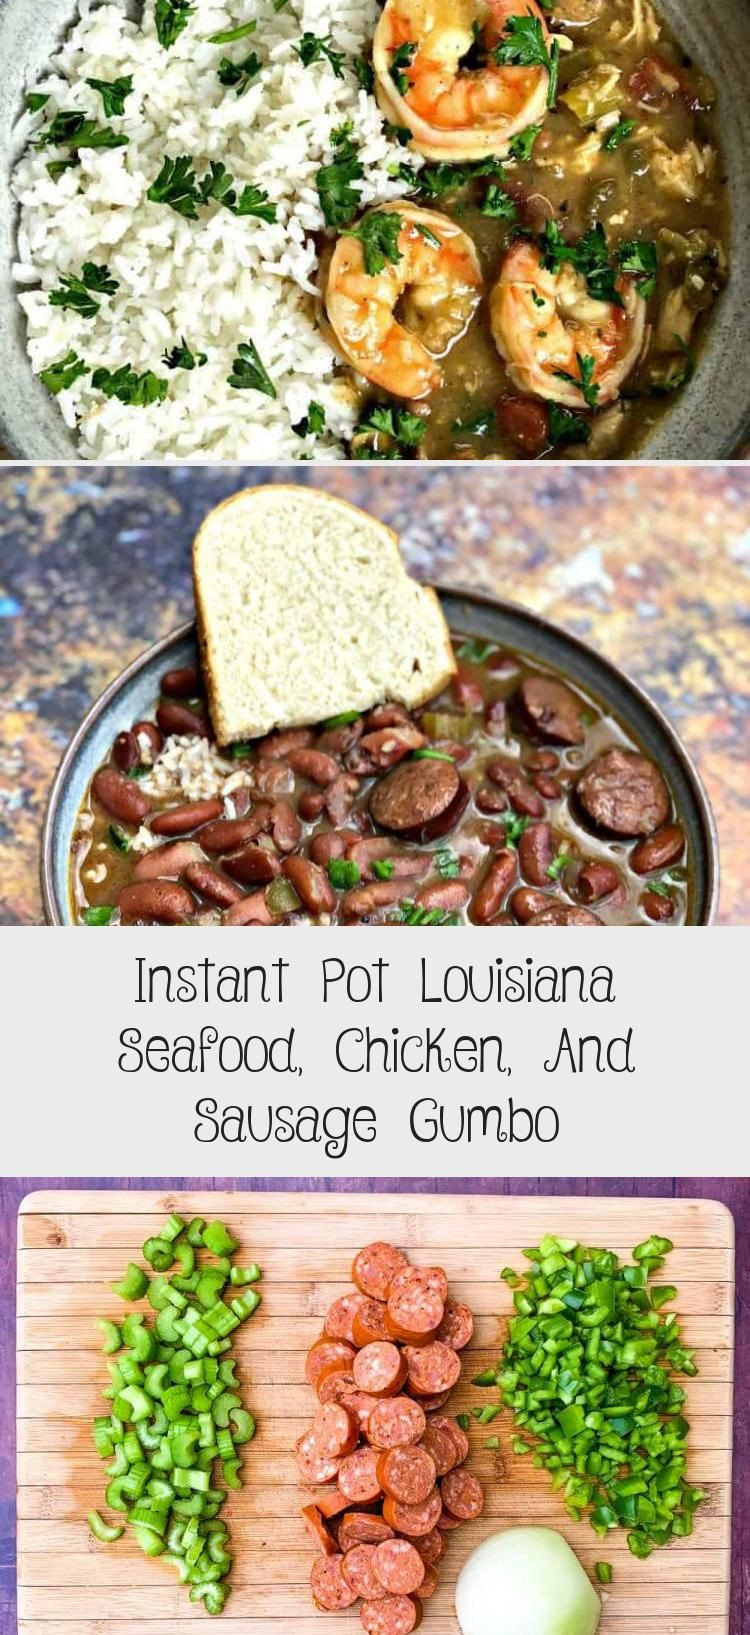 Louisiana Gumbo Recipe Chicken Sausage Shrimp
 Instant Pot Louisiana Seafood Chicken And Sausage Gumbo